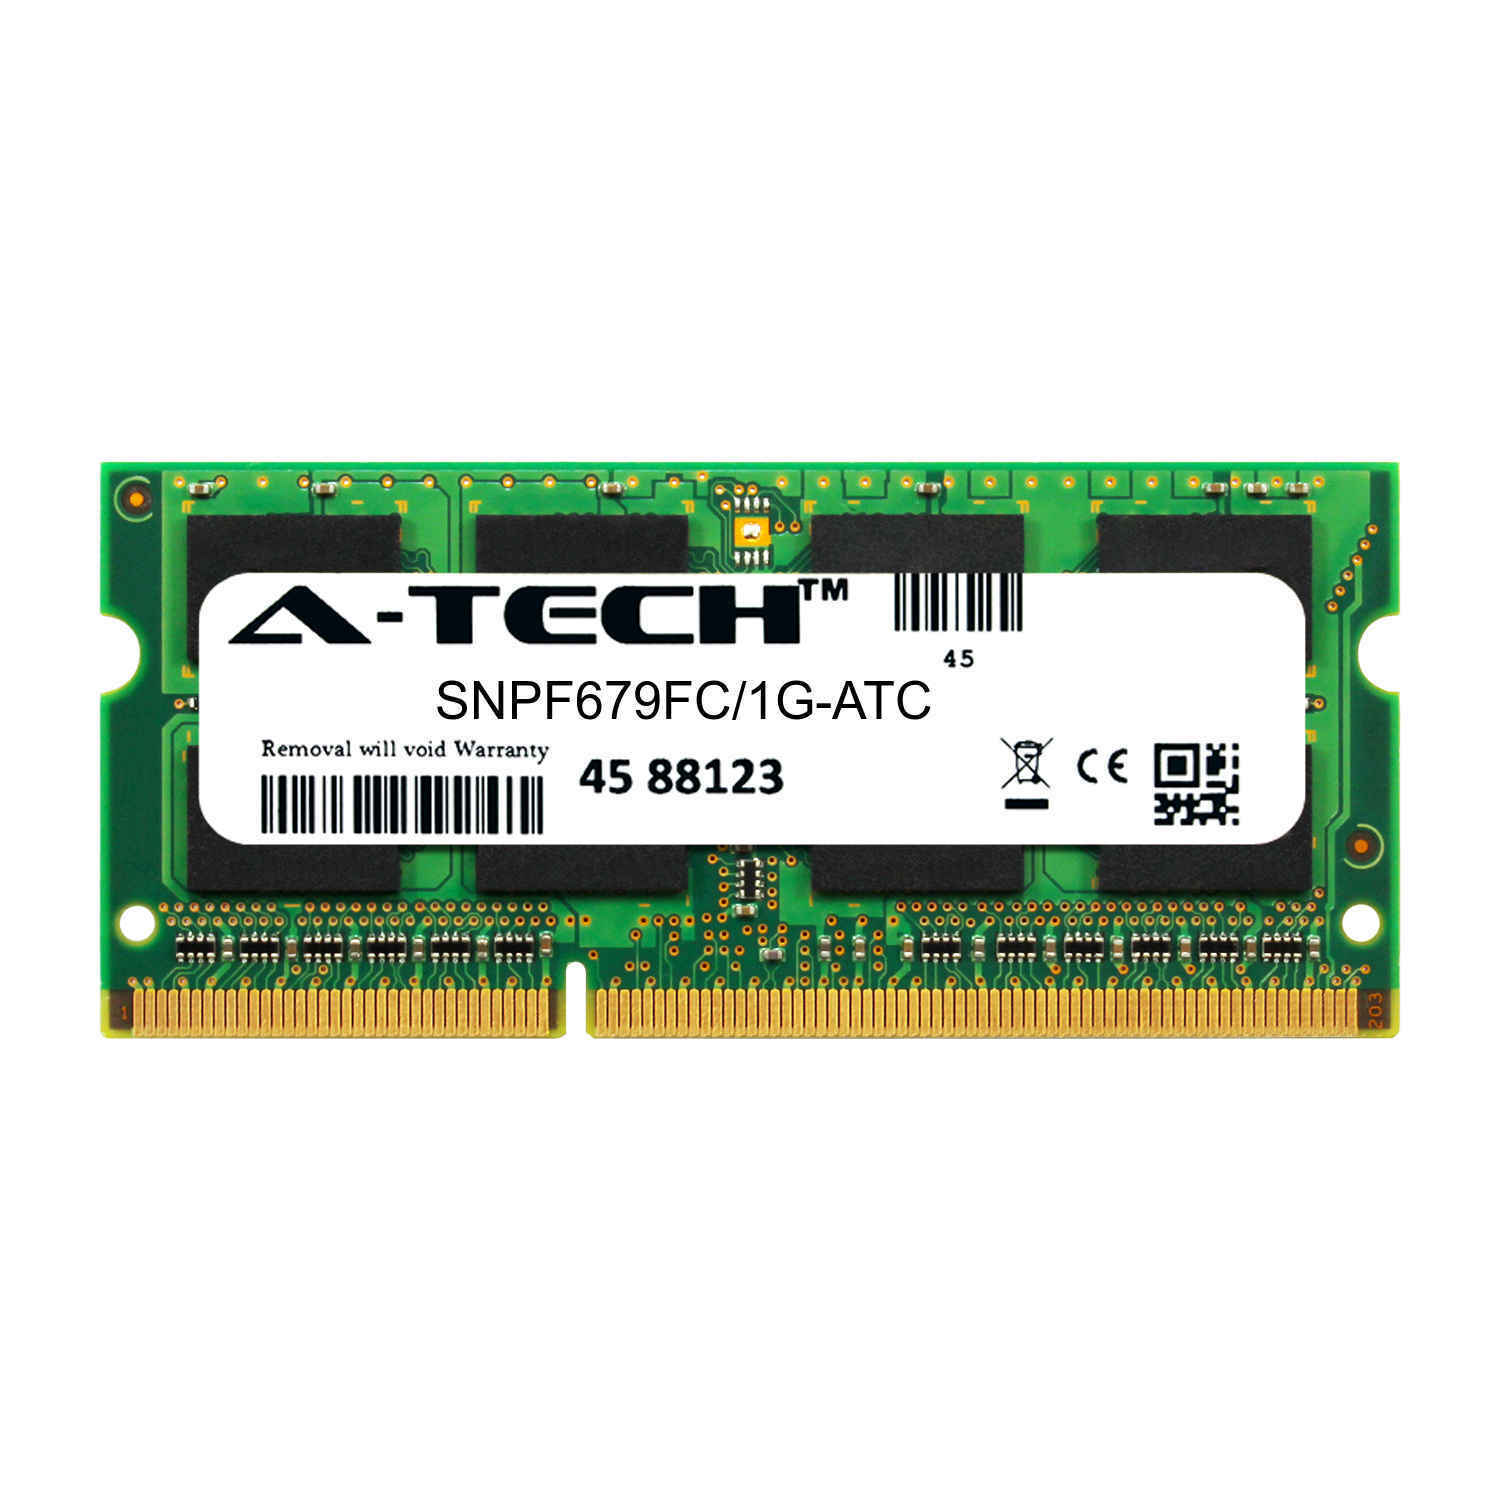 1GB DDR3 PC3-8500 1066MHz SODIMM (Dell SNPF679FC/1G Equivalent) Memory RAM